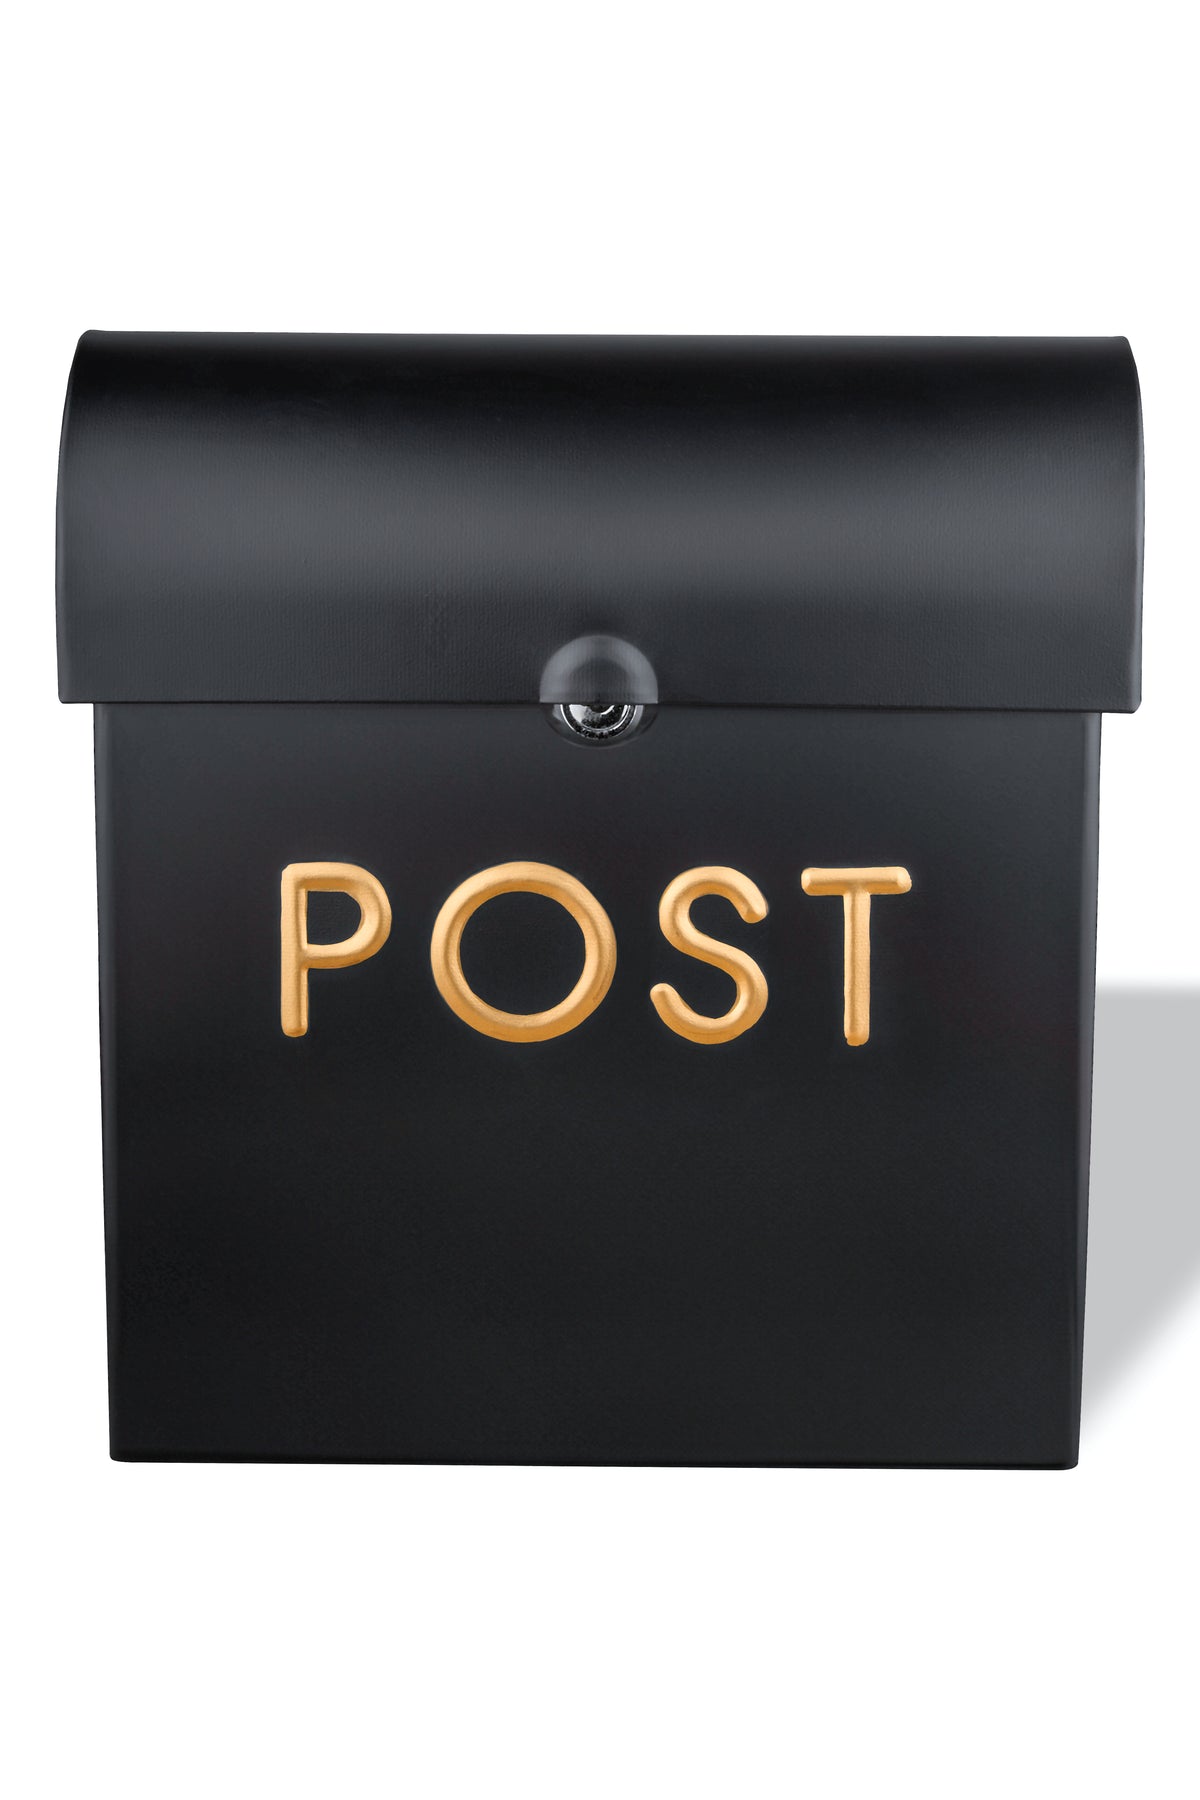 POST Embossed Lockable Post Box Double Flap - Black